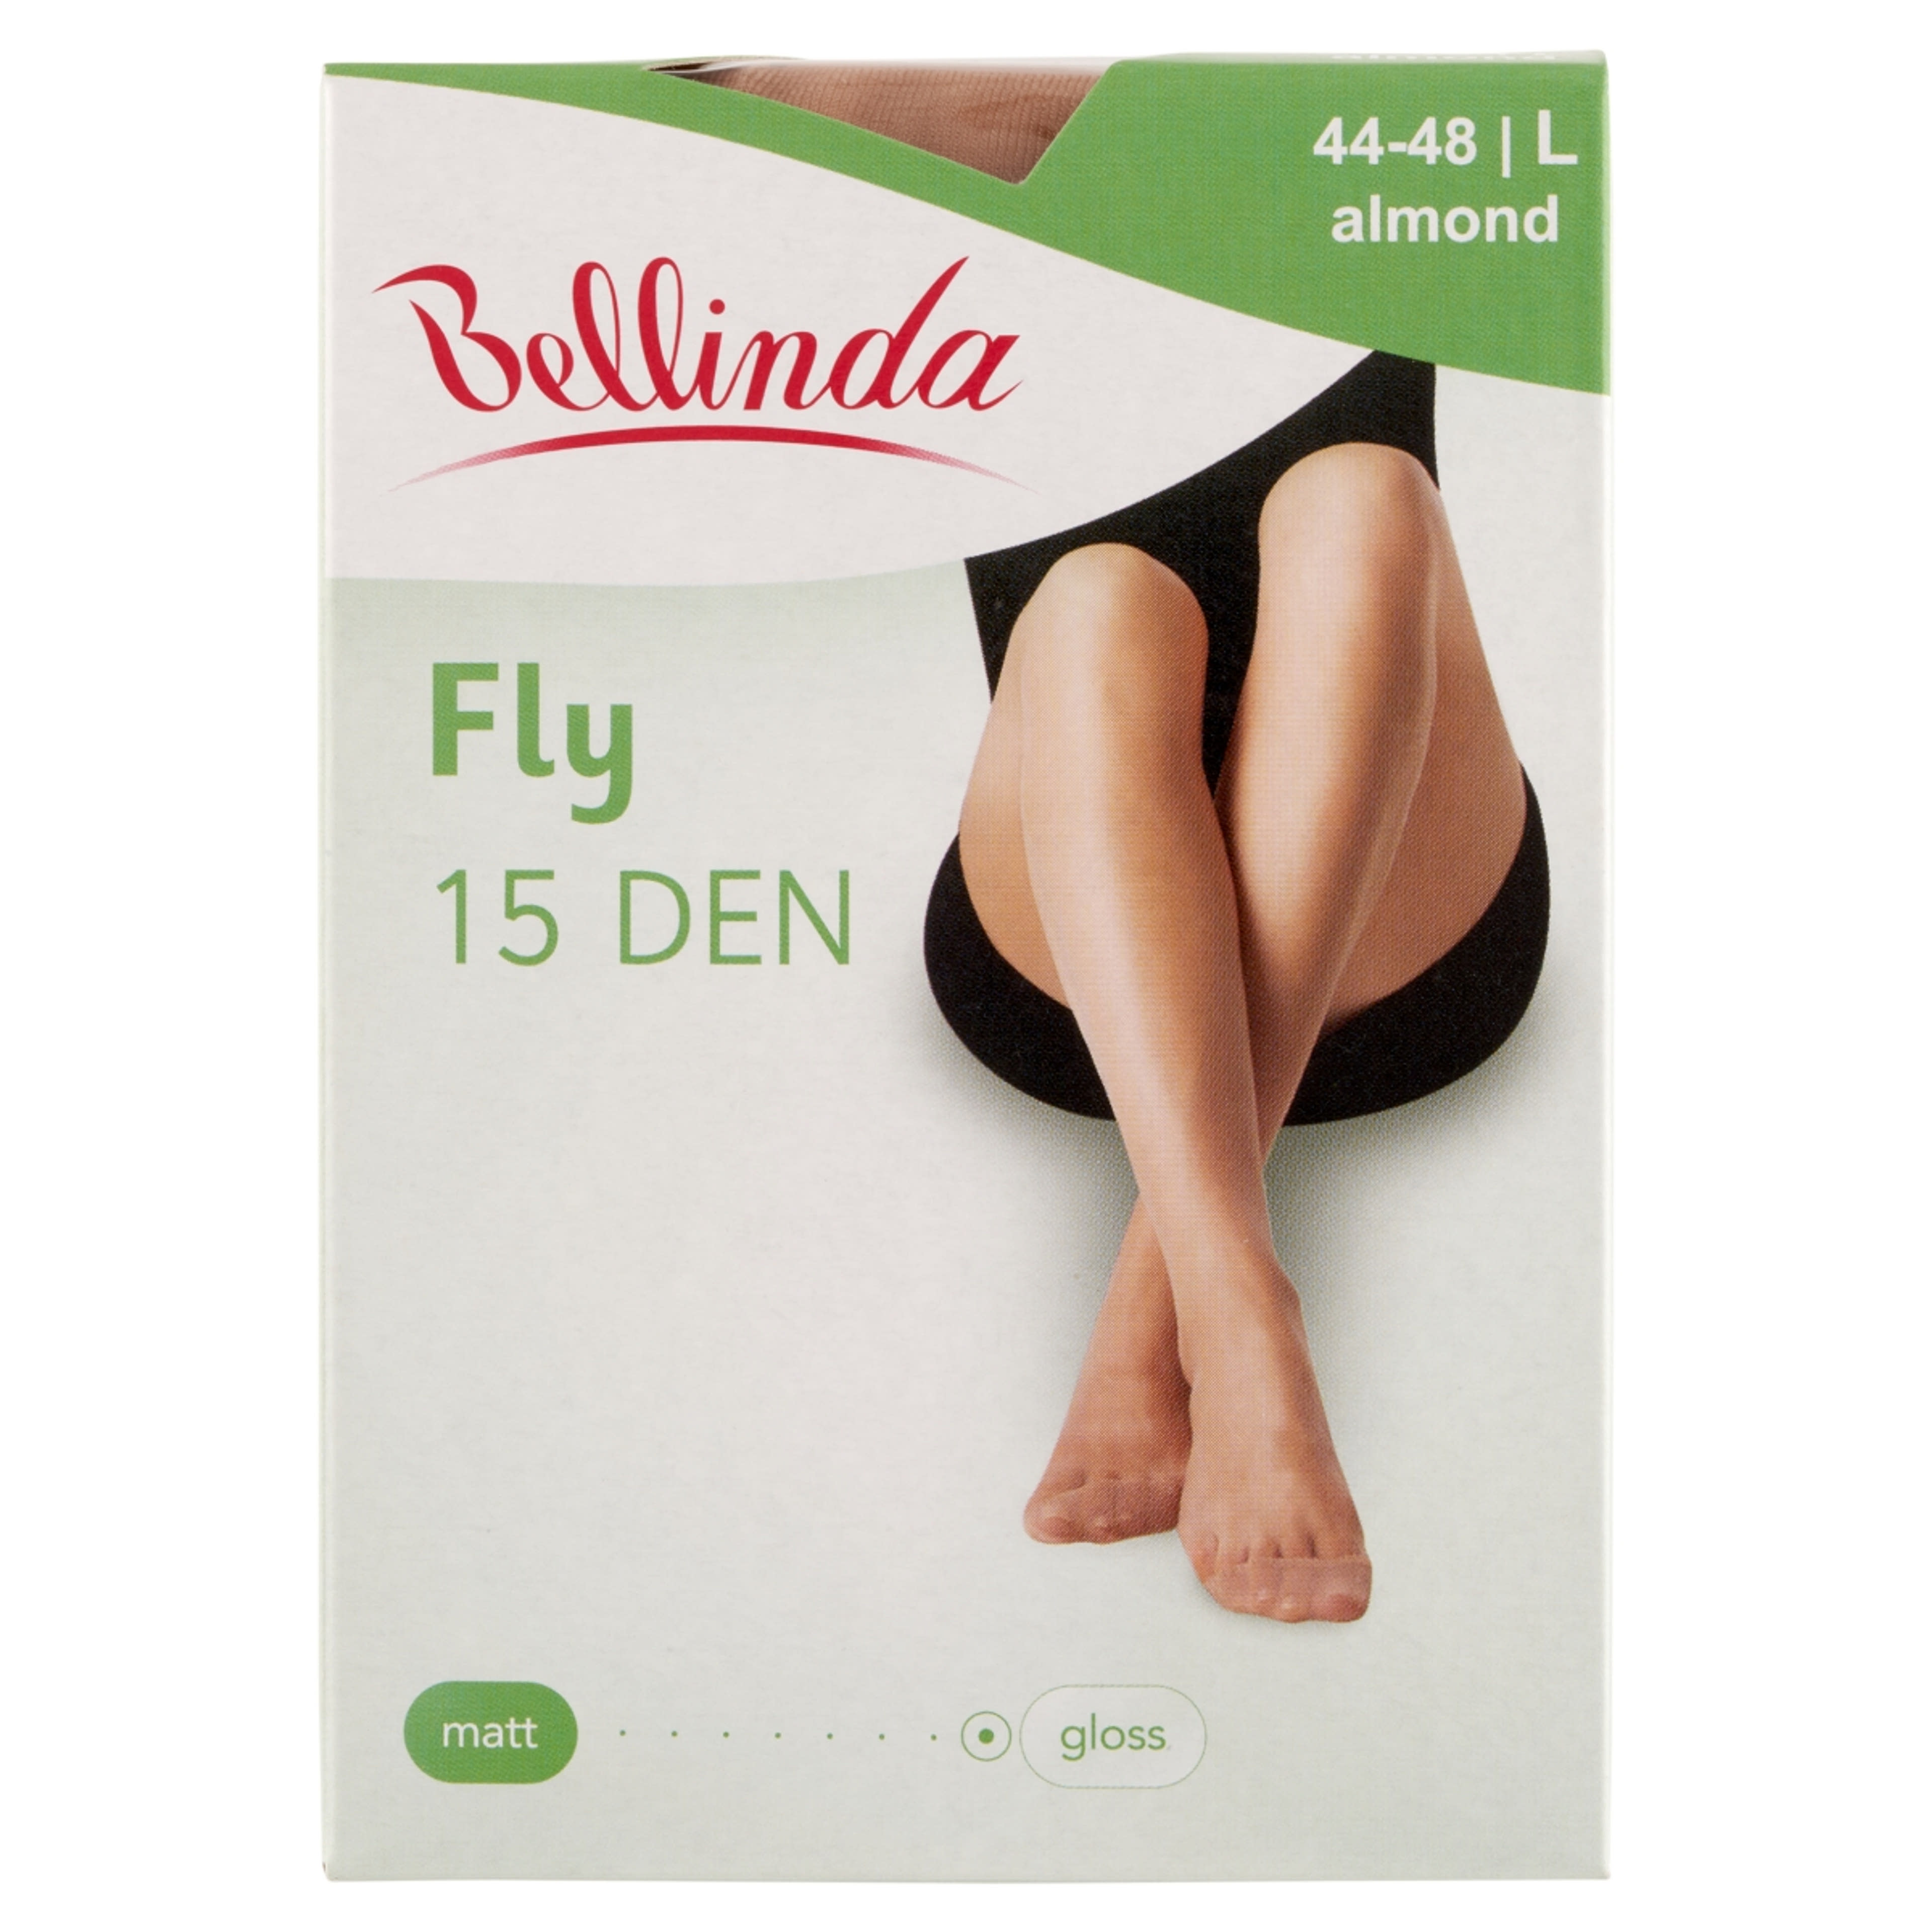 Bellinda Fly 15 Den Almond L Harisnya - 1 db